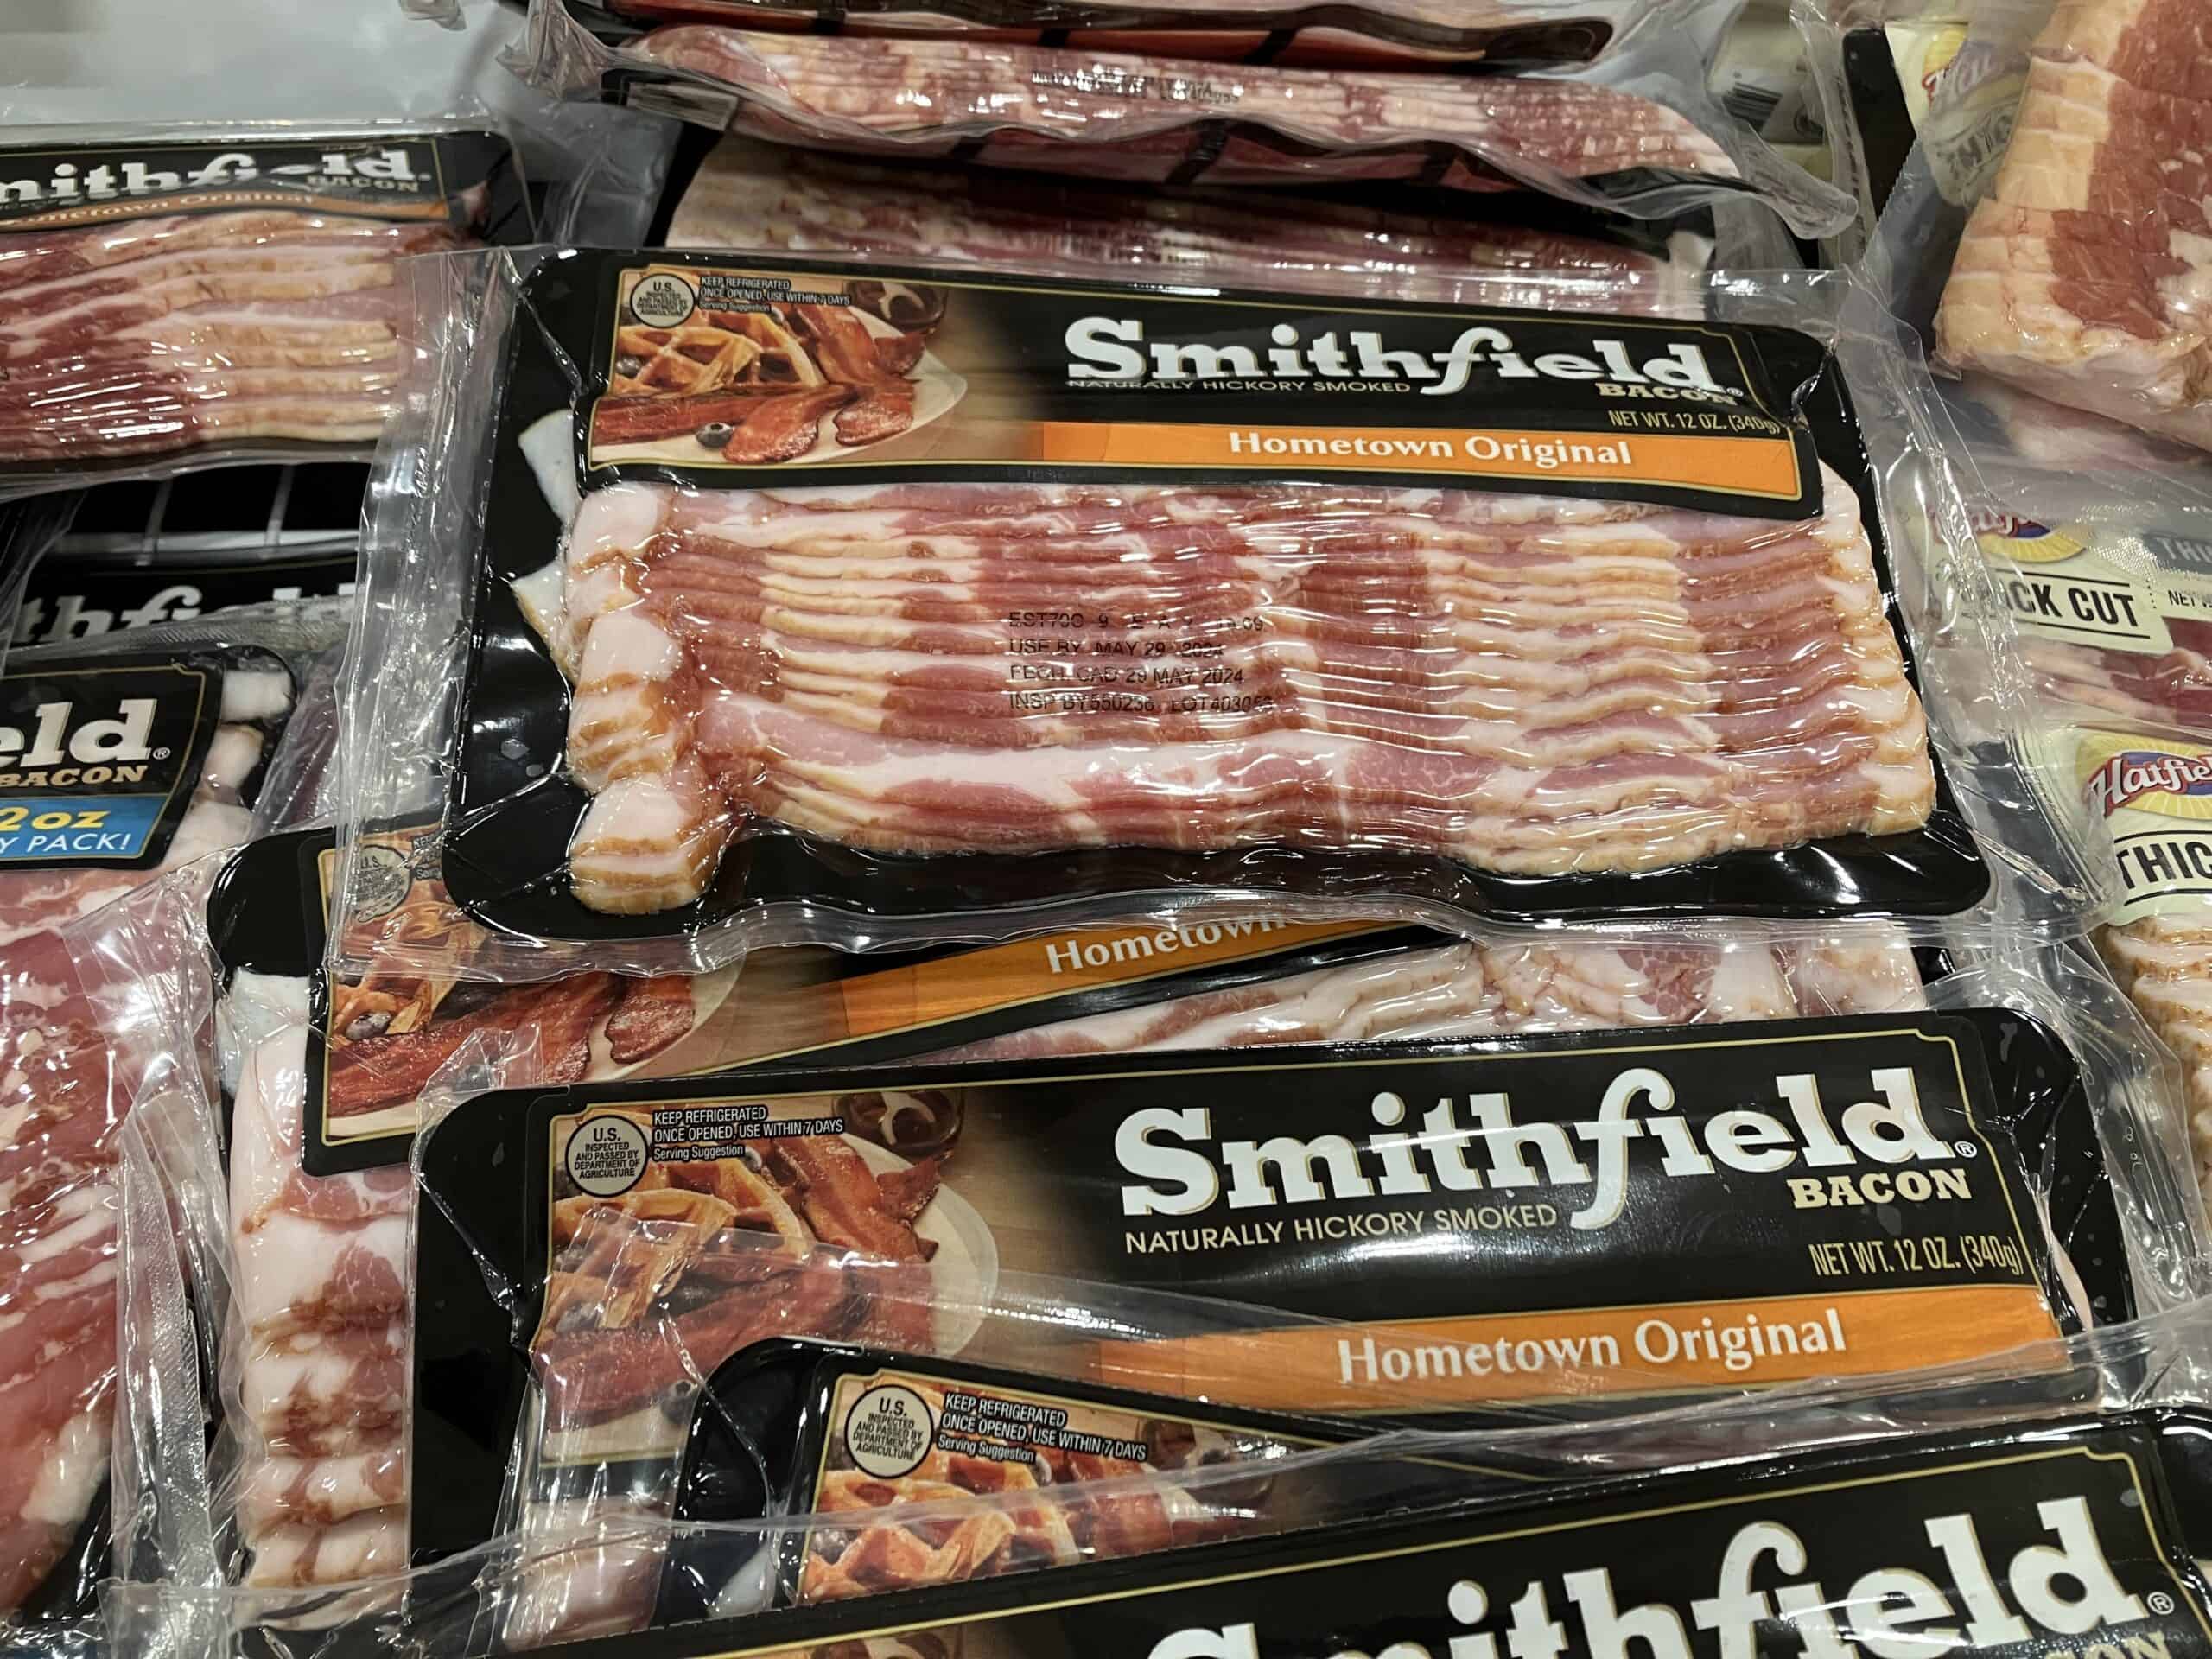 Smithfield Hometown Original bacon